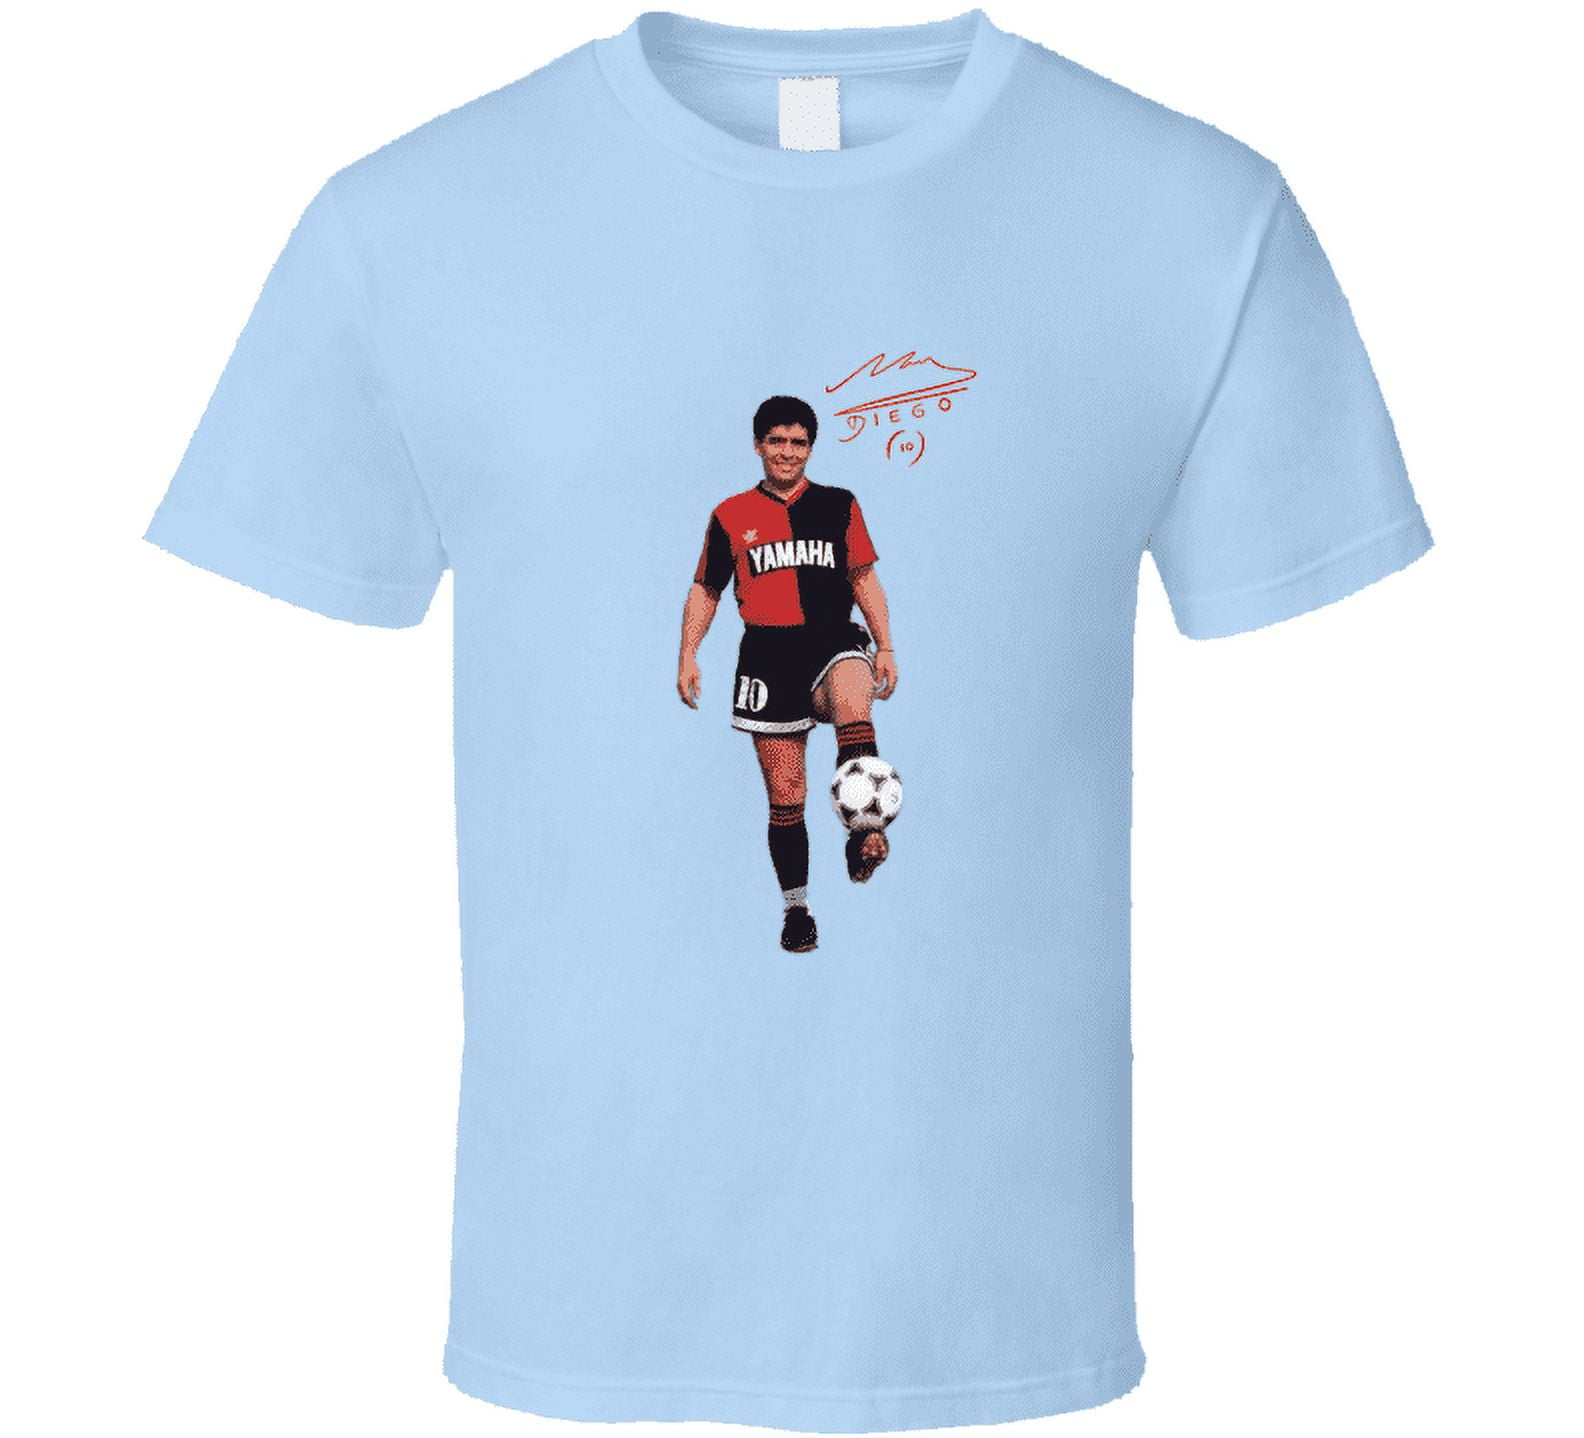 Diego Maradona Soccer Jersey for Youth, Women, or Men